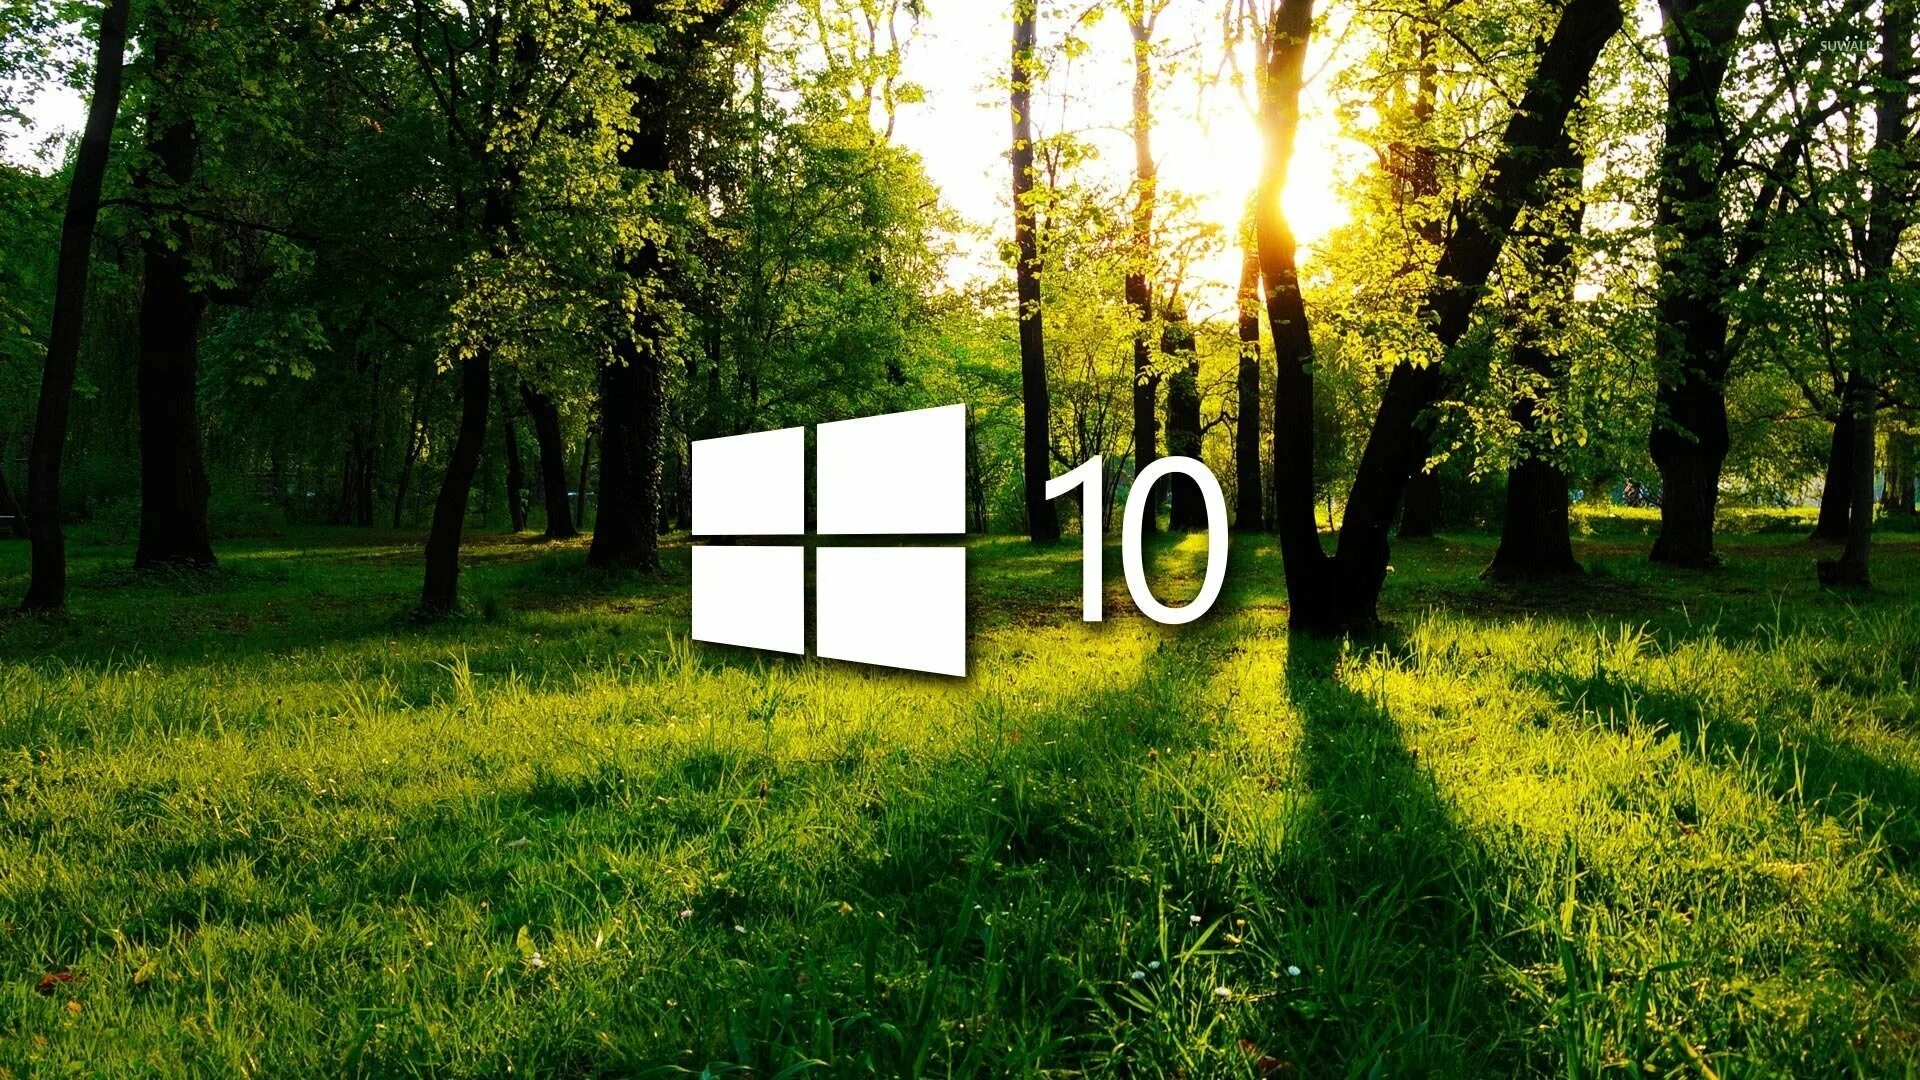 Обои Windows. Обои на рабочий стол Windows 10. Заставка на рабочий стол Windows 10. Фон рабочего стола виндовс 10. Windows 10 camp